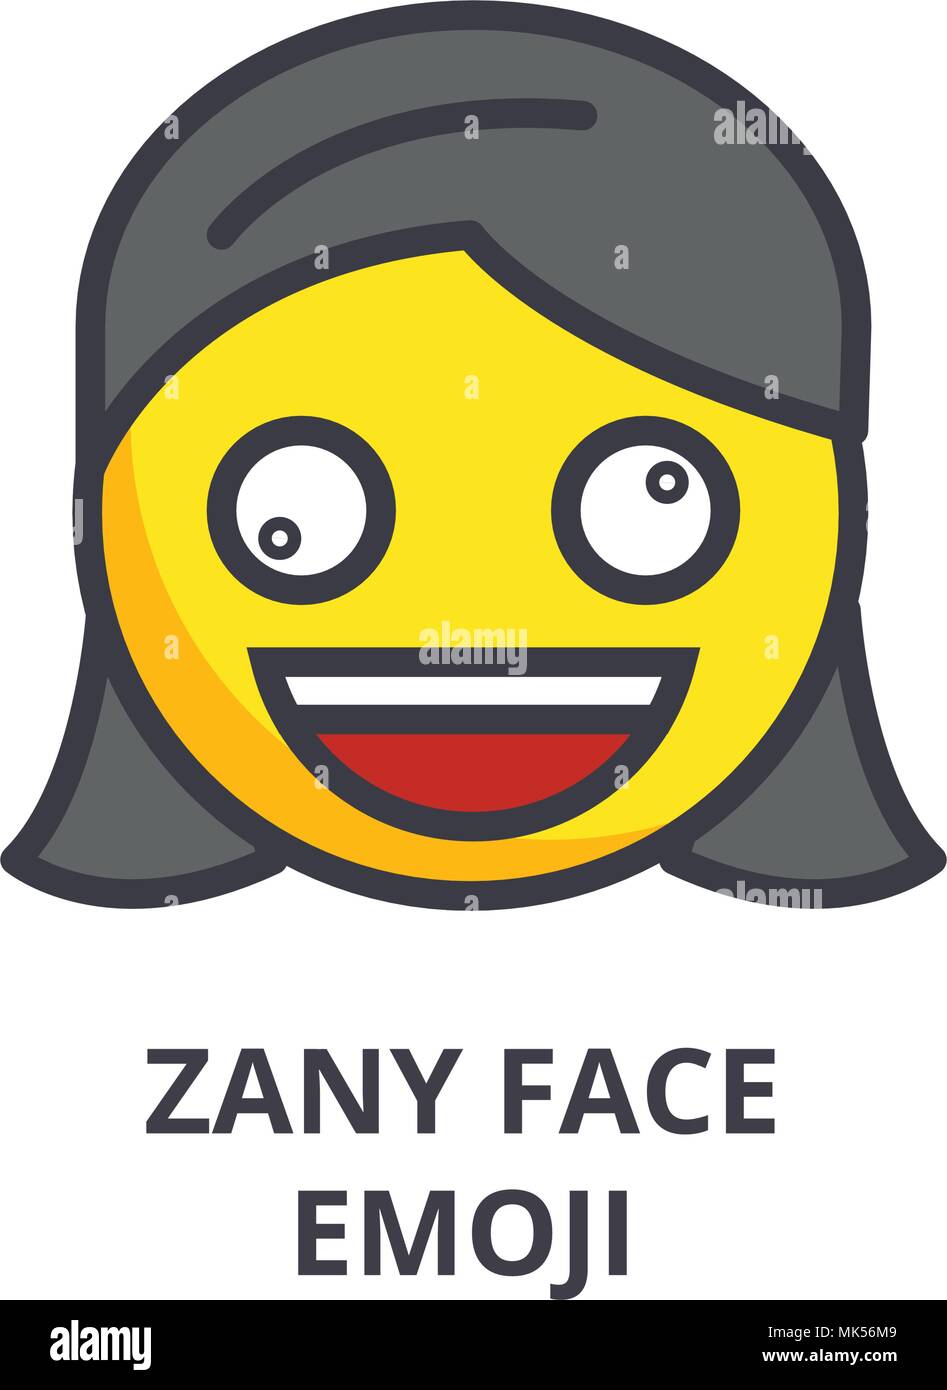 zany face emoji vector line icon, sign, illustration on background, editable strokes Stock Vector